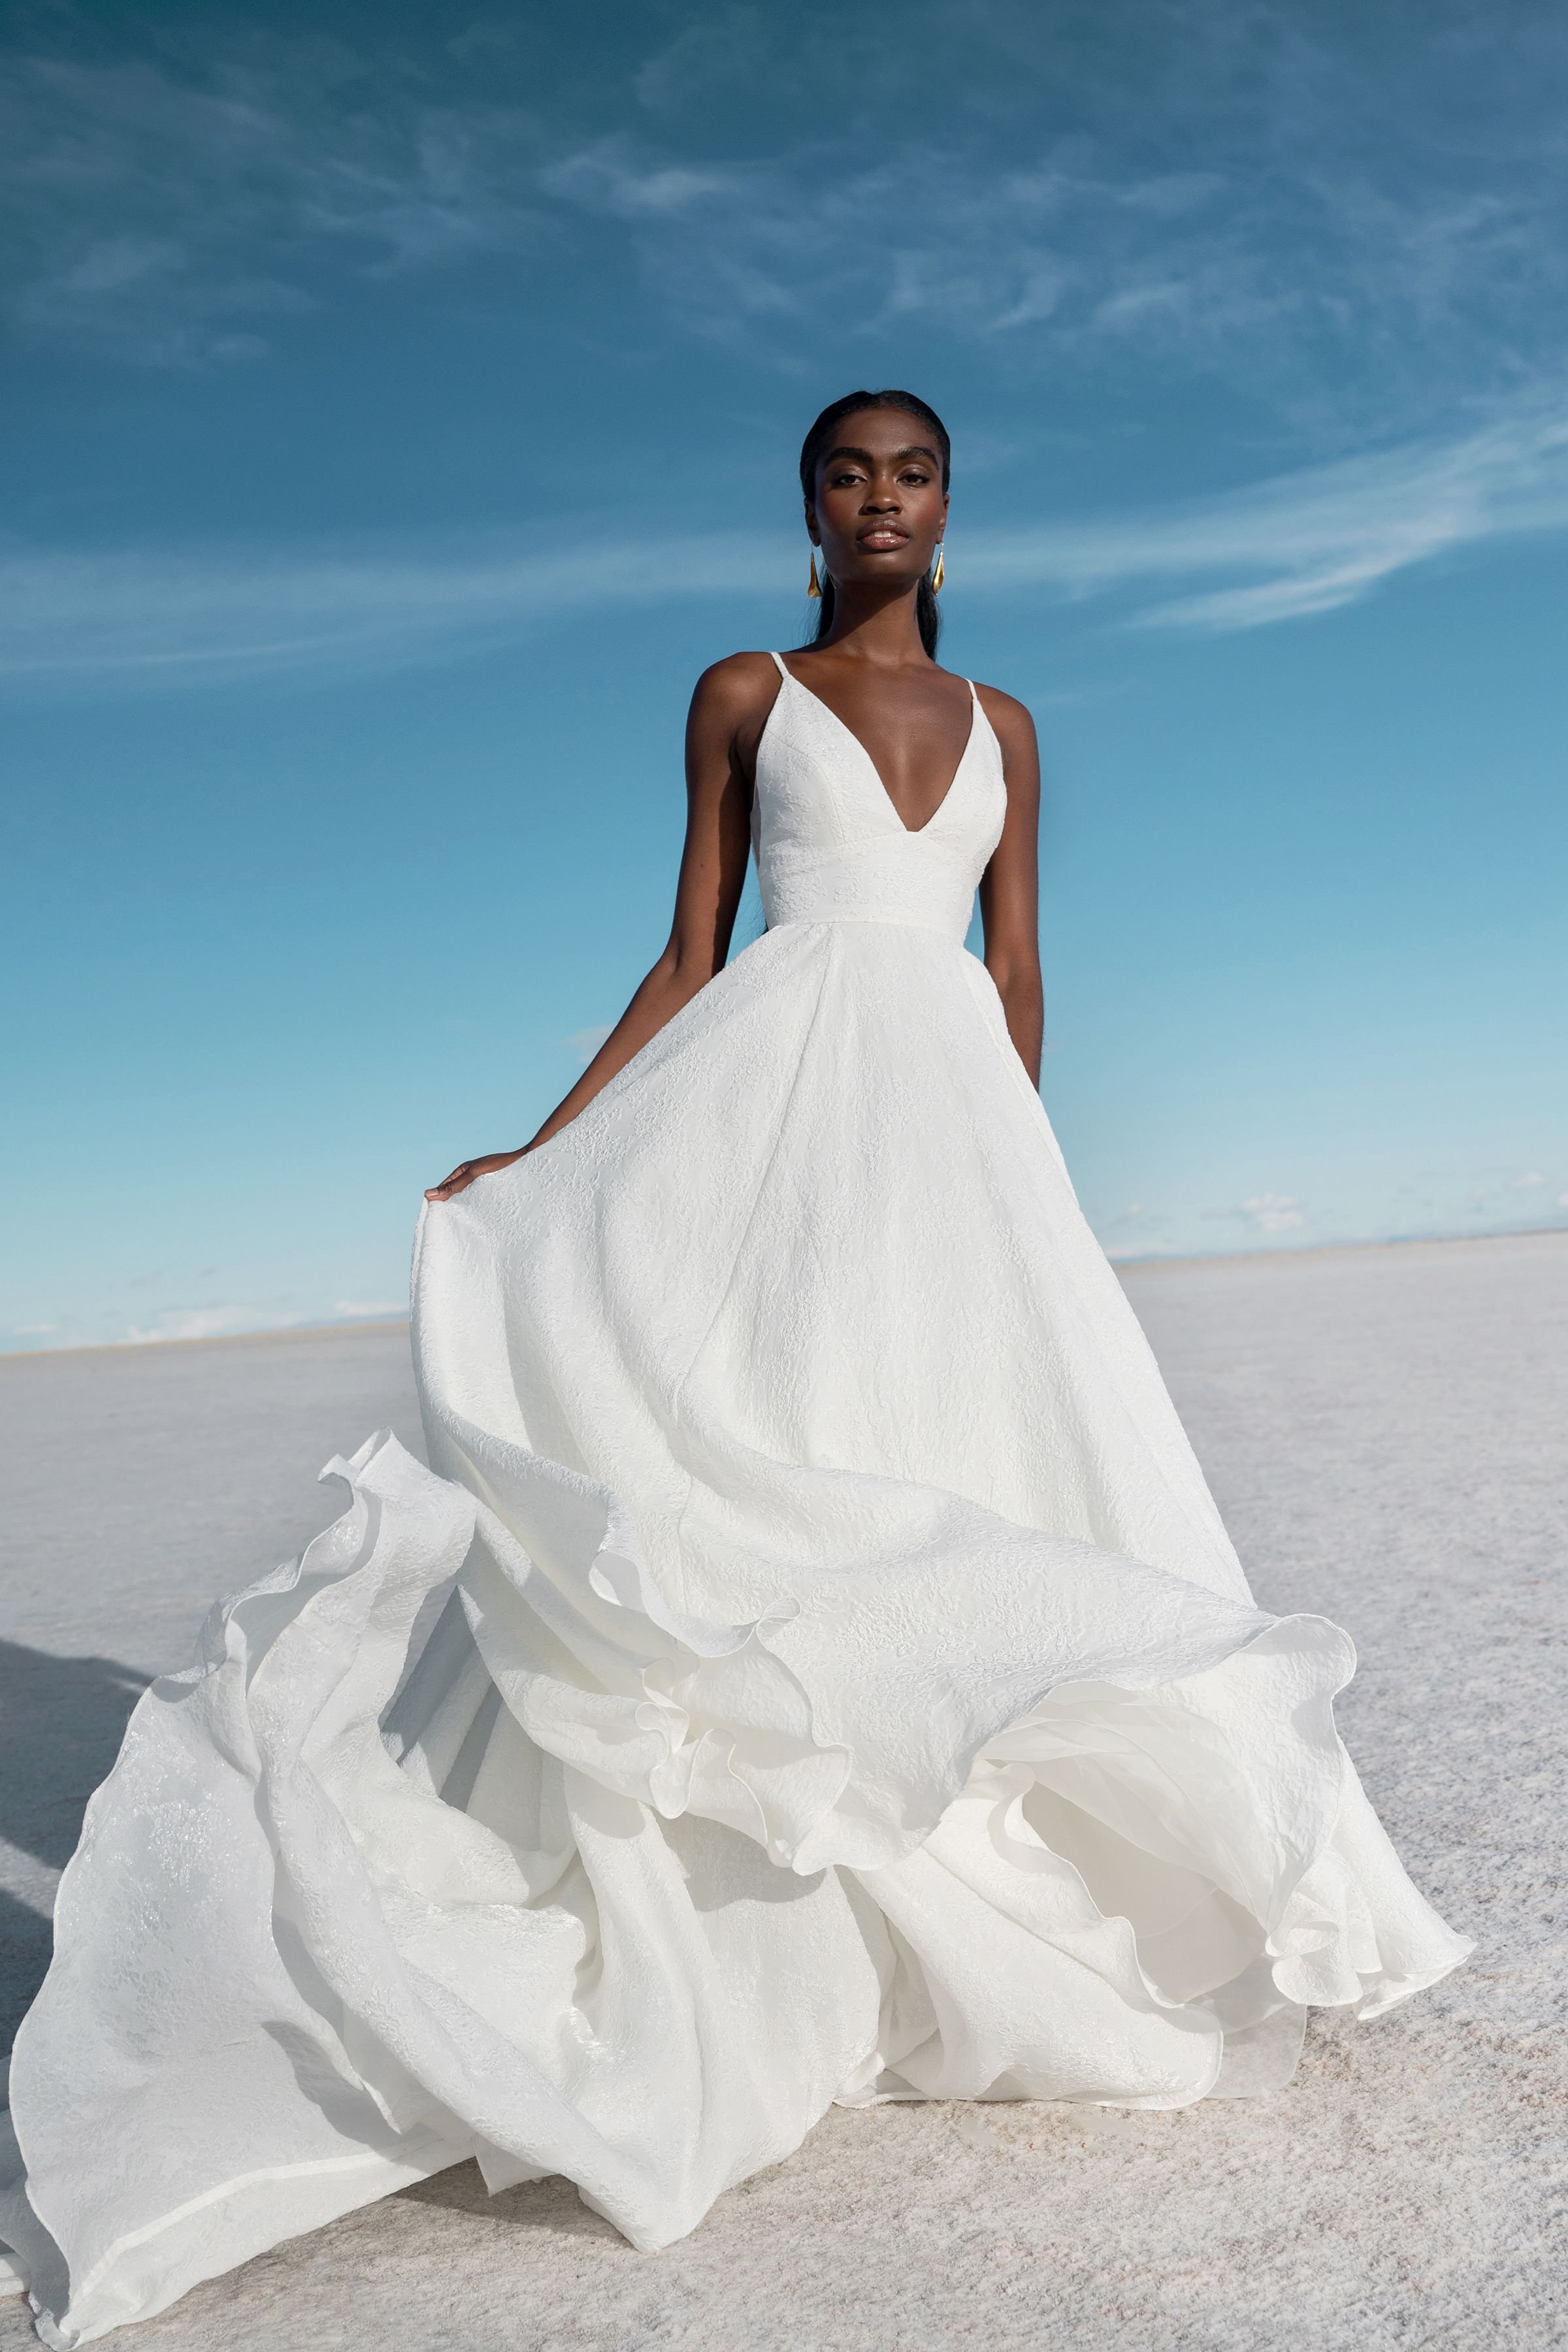 blanc-de-blanc-bridal-boutique-pittsburgh-cleveland-dress-wedding-gownPersephone.jpeg